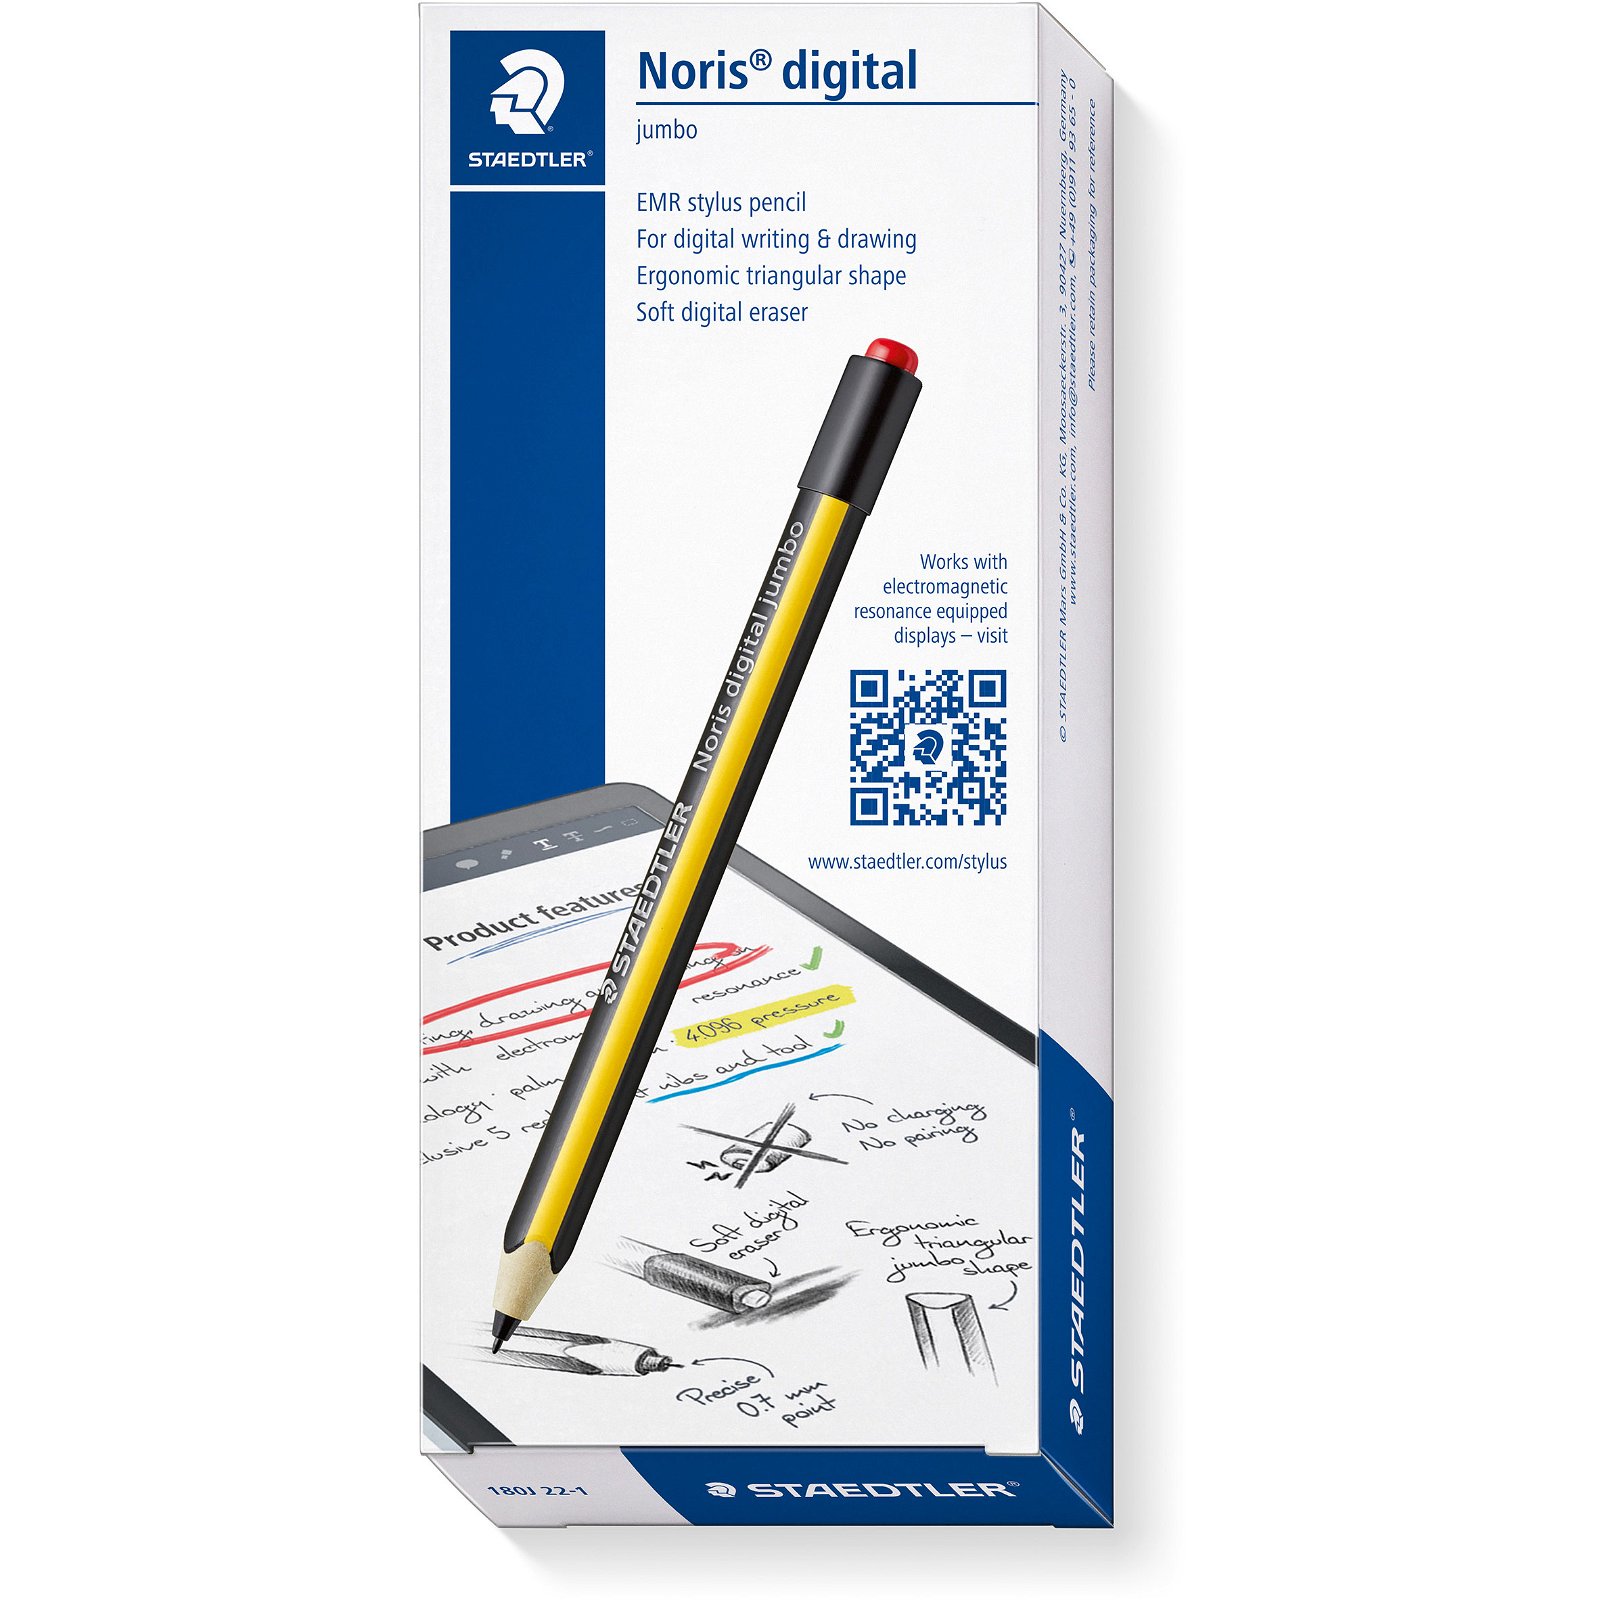 STAEDTLER Noris Digital Jumbo Stylus pen